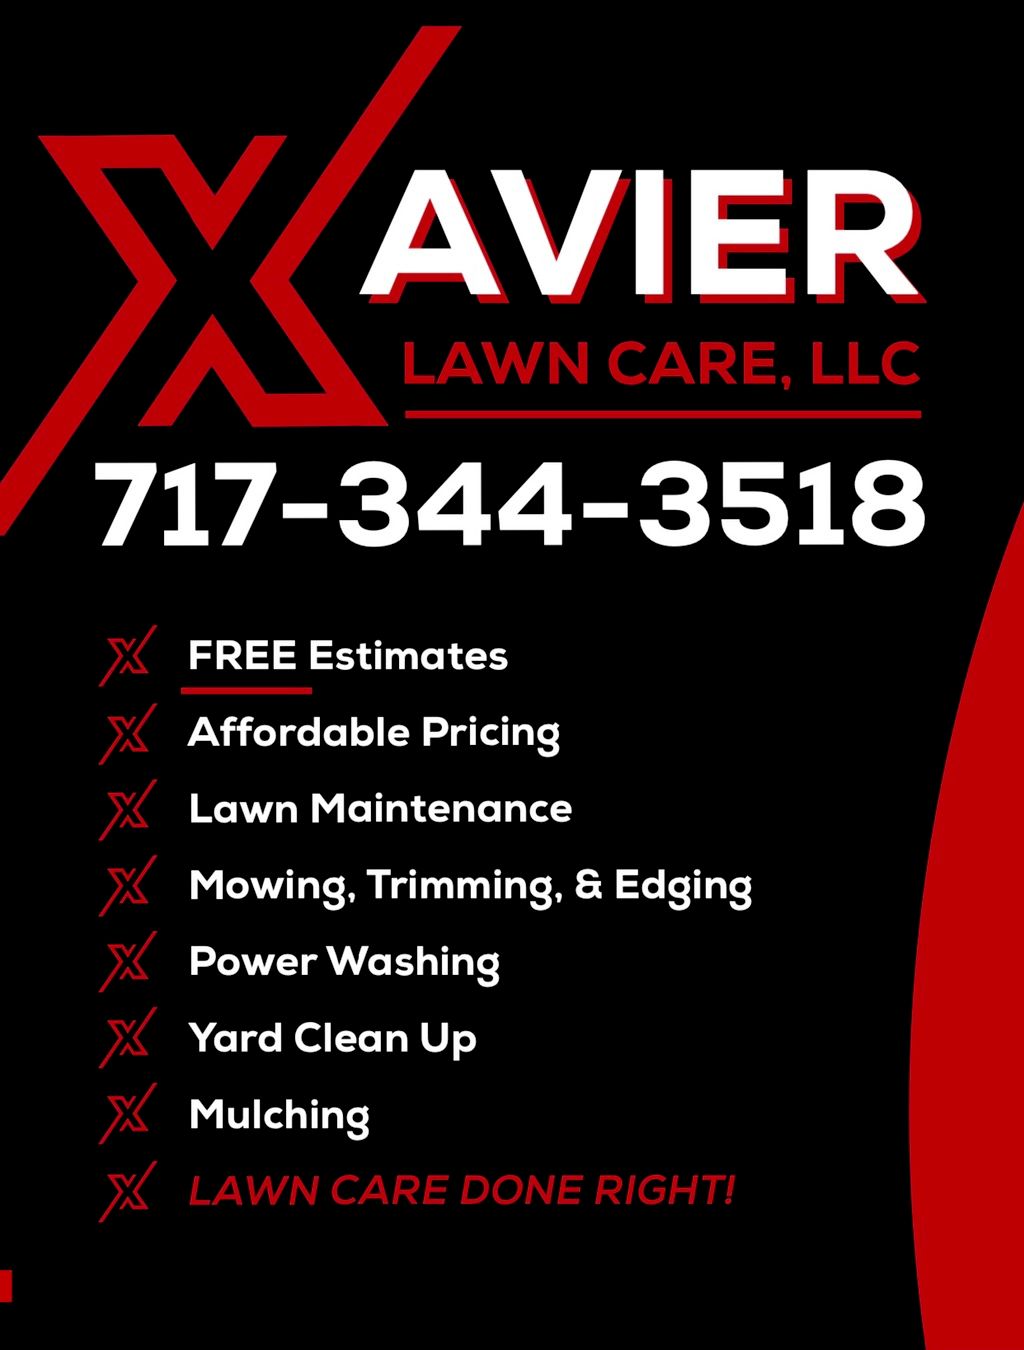 Xavier Lawn Care